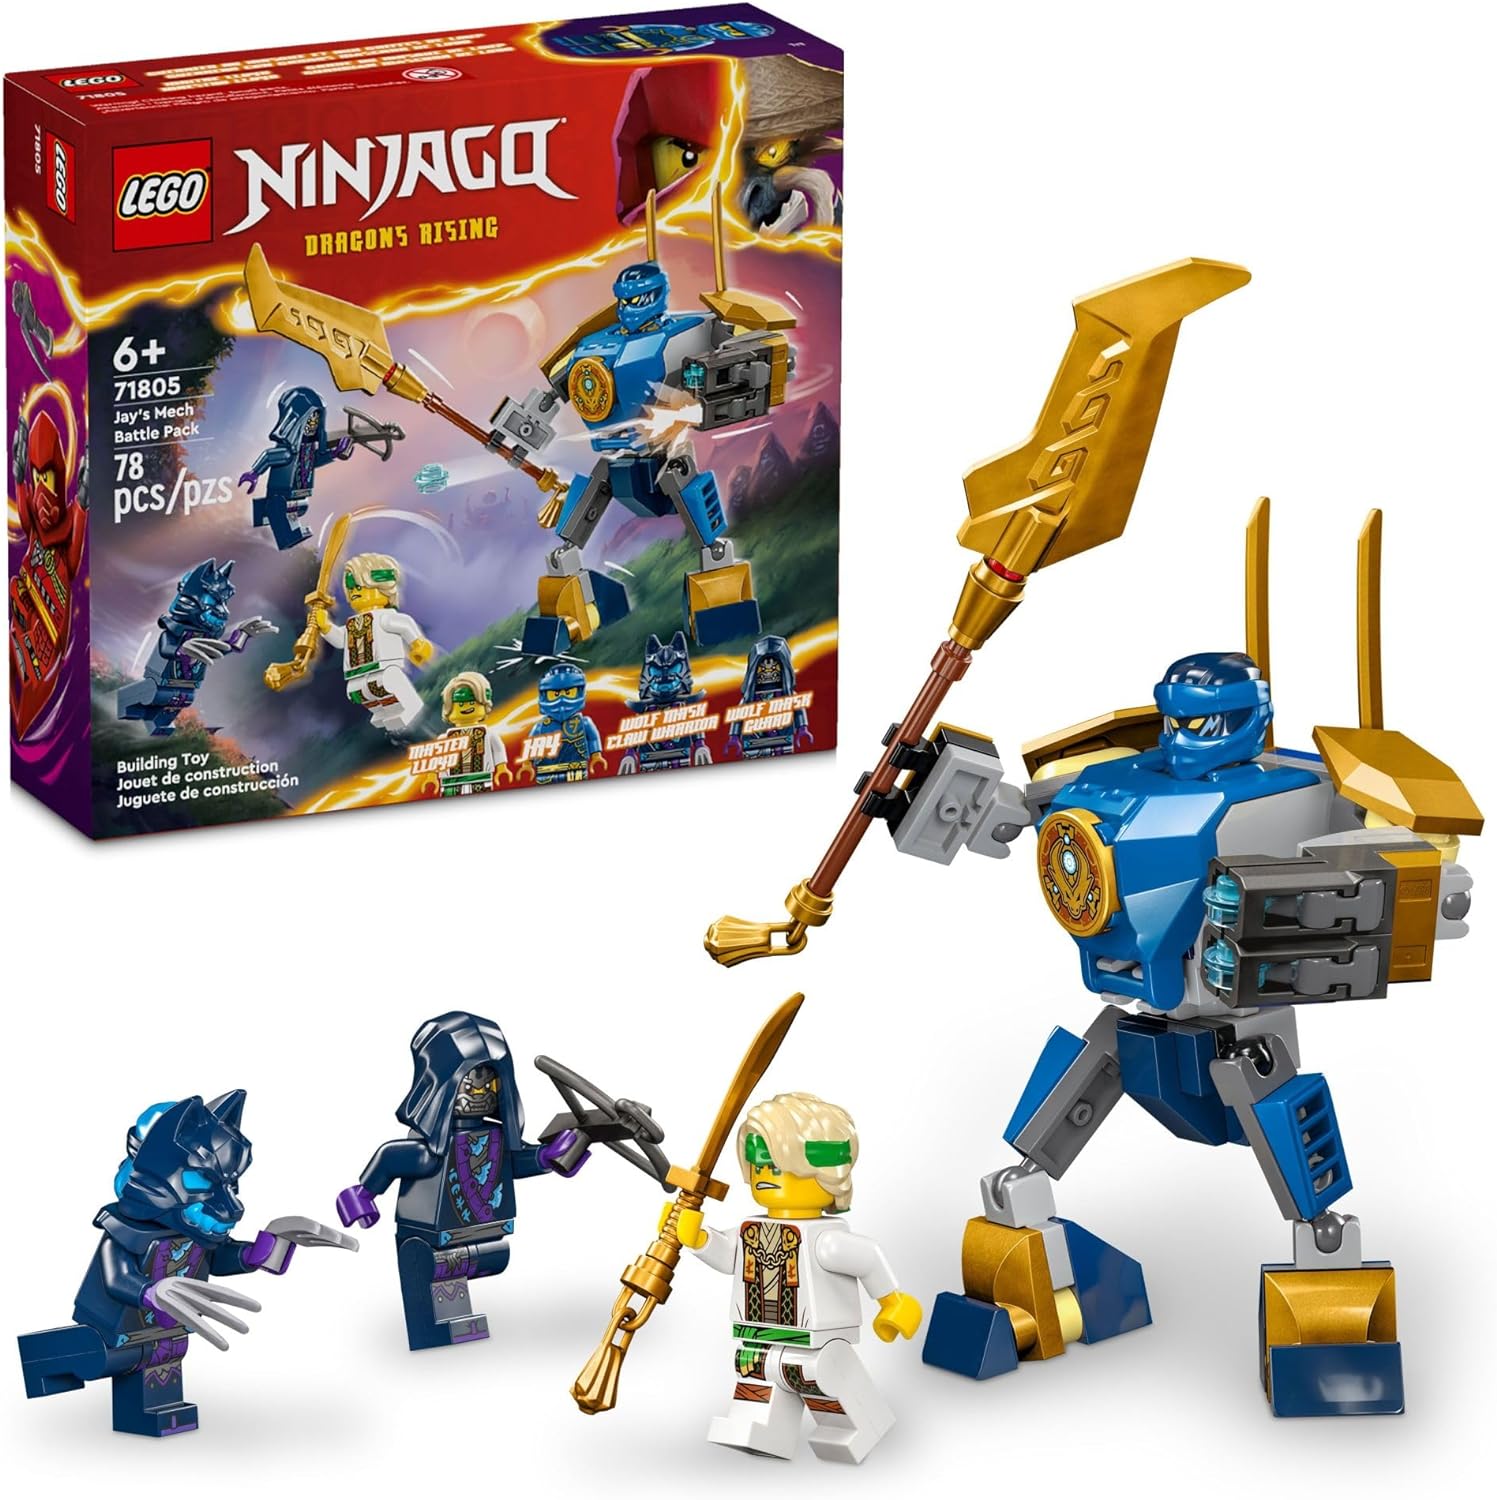 LEGO 71805 NINJAGO Jay’s Mech Battle Pack Adventure Toy Set for Kids, with Jay Minifigure and Mech Figure, Creative Ninja Gift.